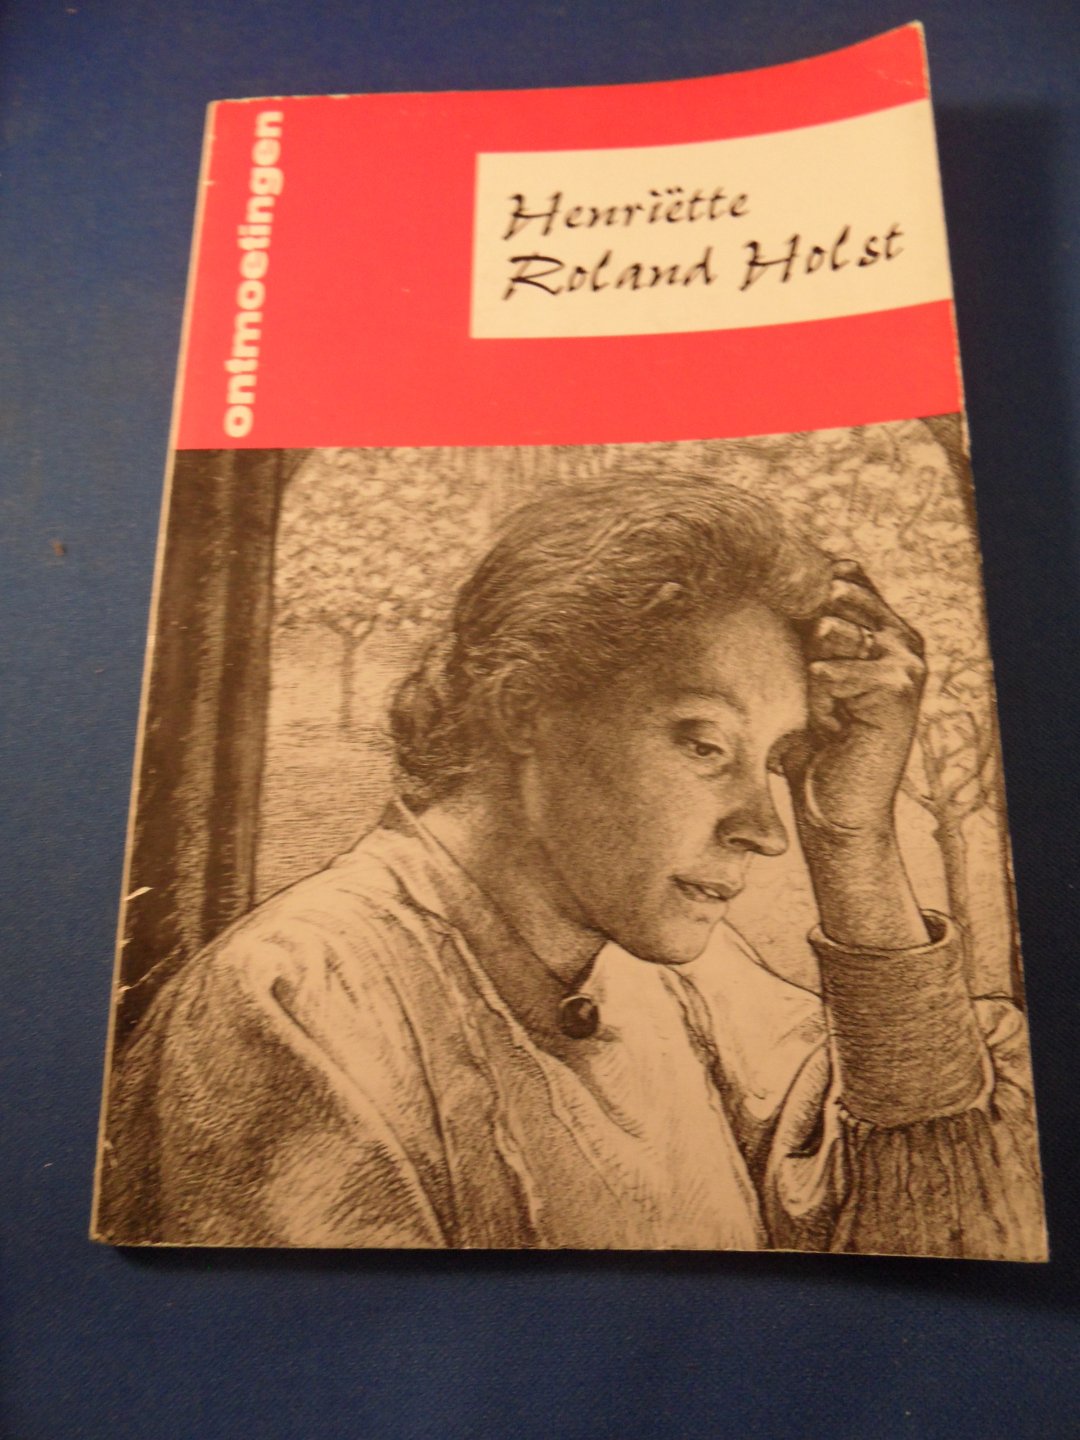 Simons W.J. - Ontmoetingen No.77: Henriette Roland Holst